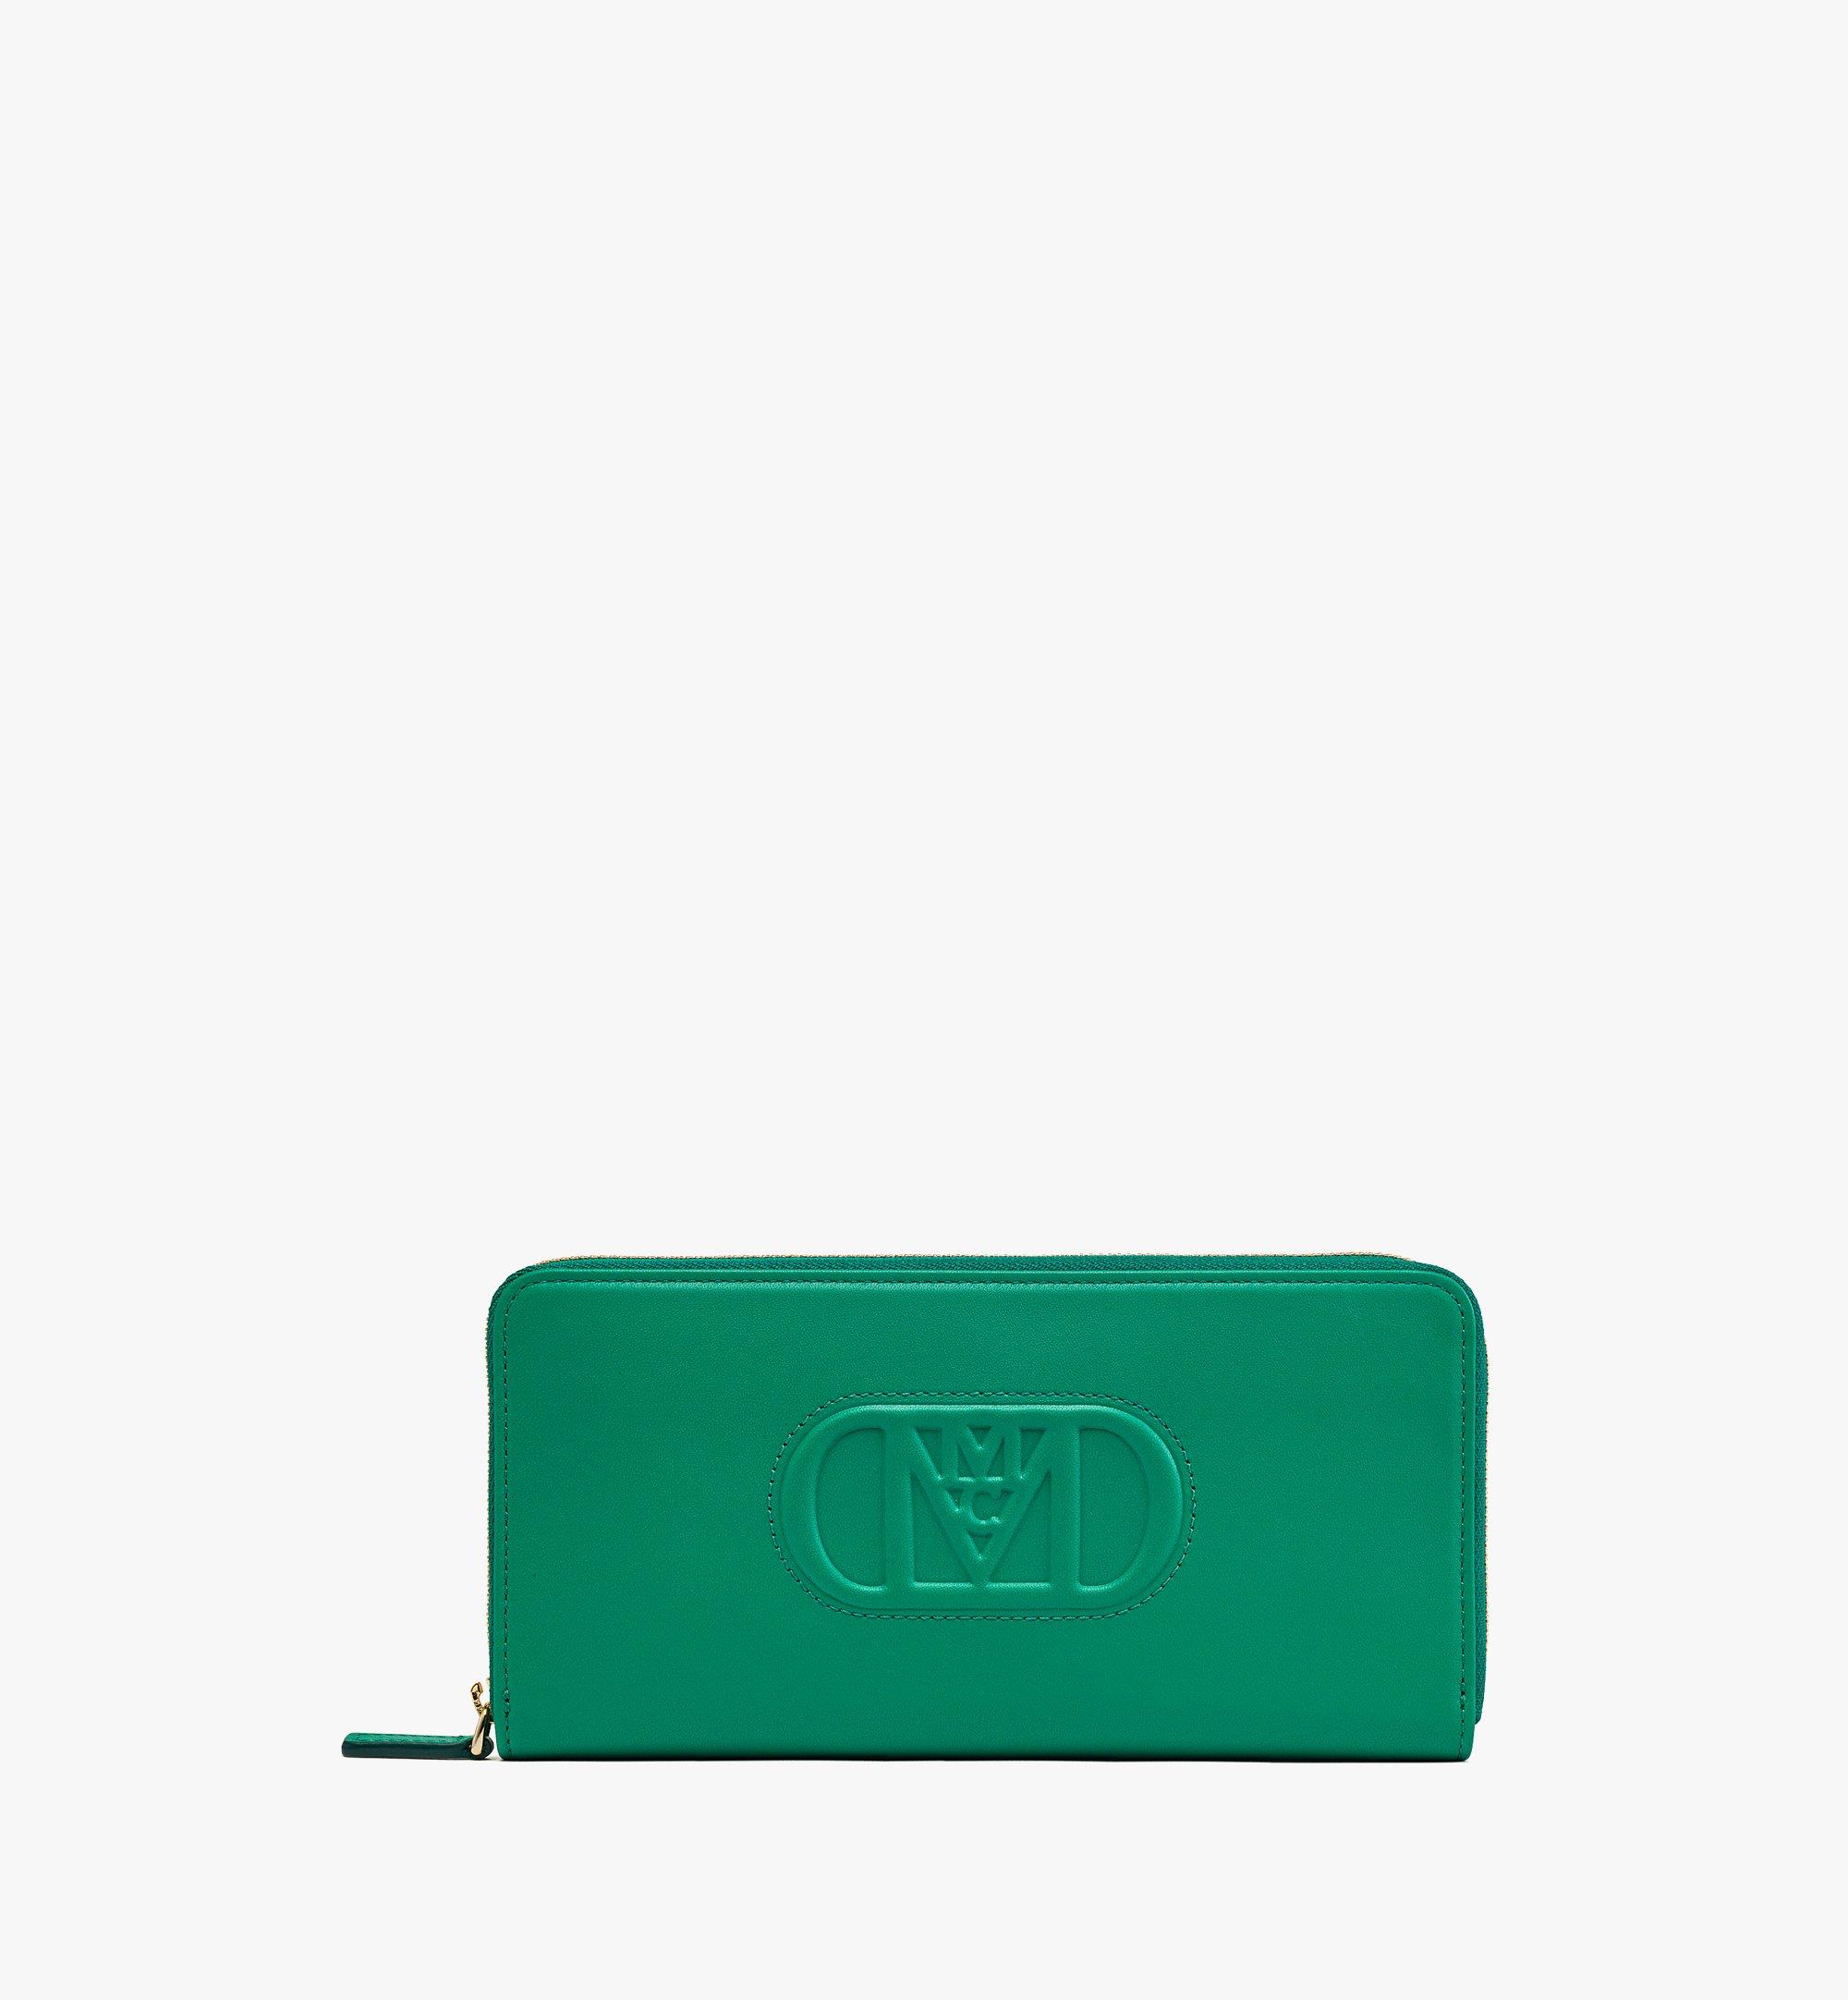 MCM Mode Travia Zip Around Wallet in Spanish Nappa Leather Green MYLDSLD03J8001 Alternate View 1